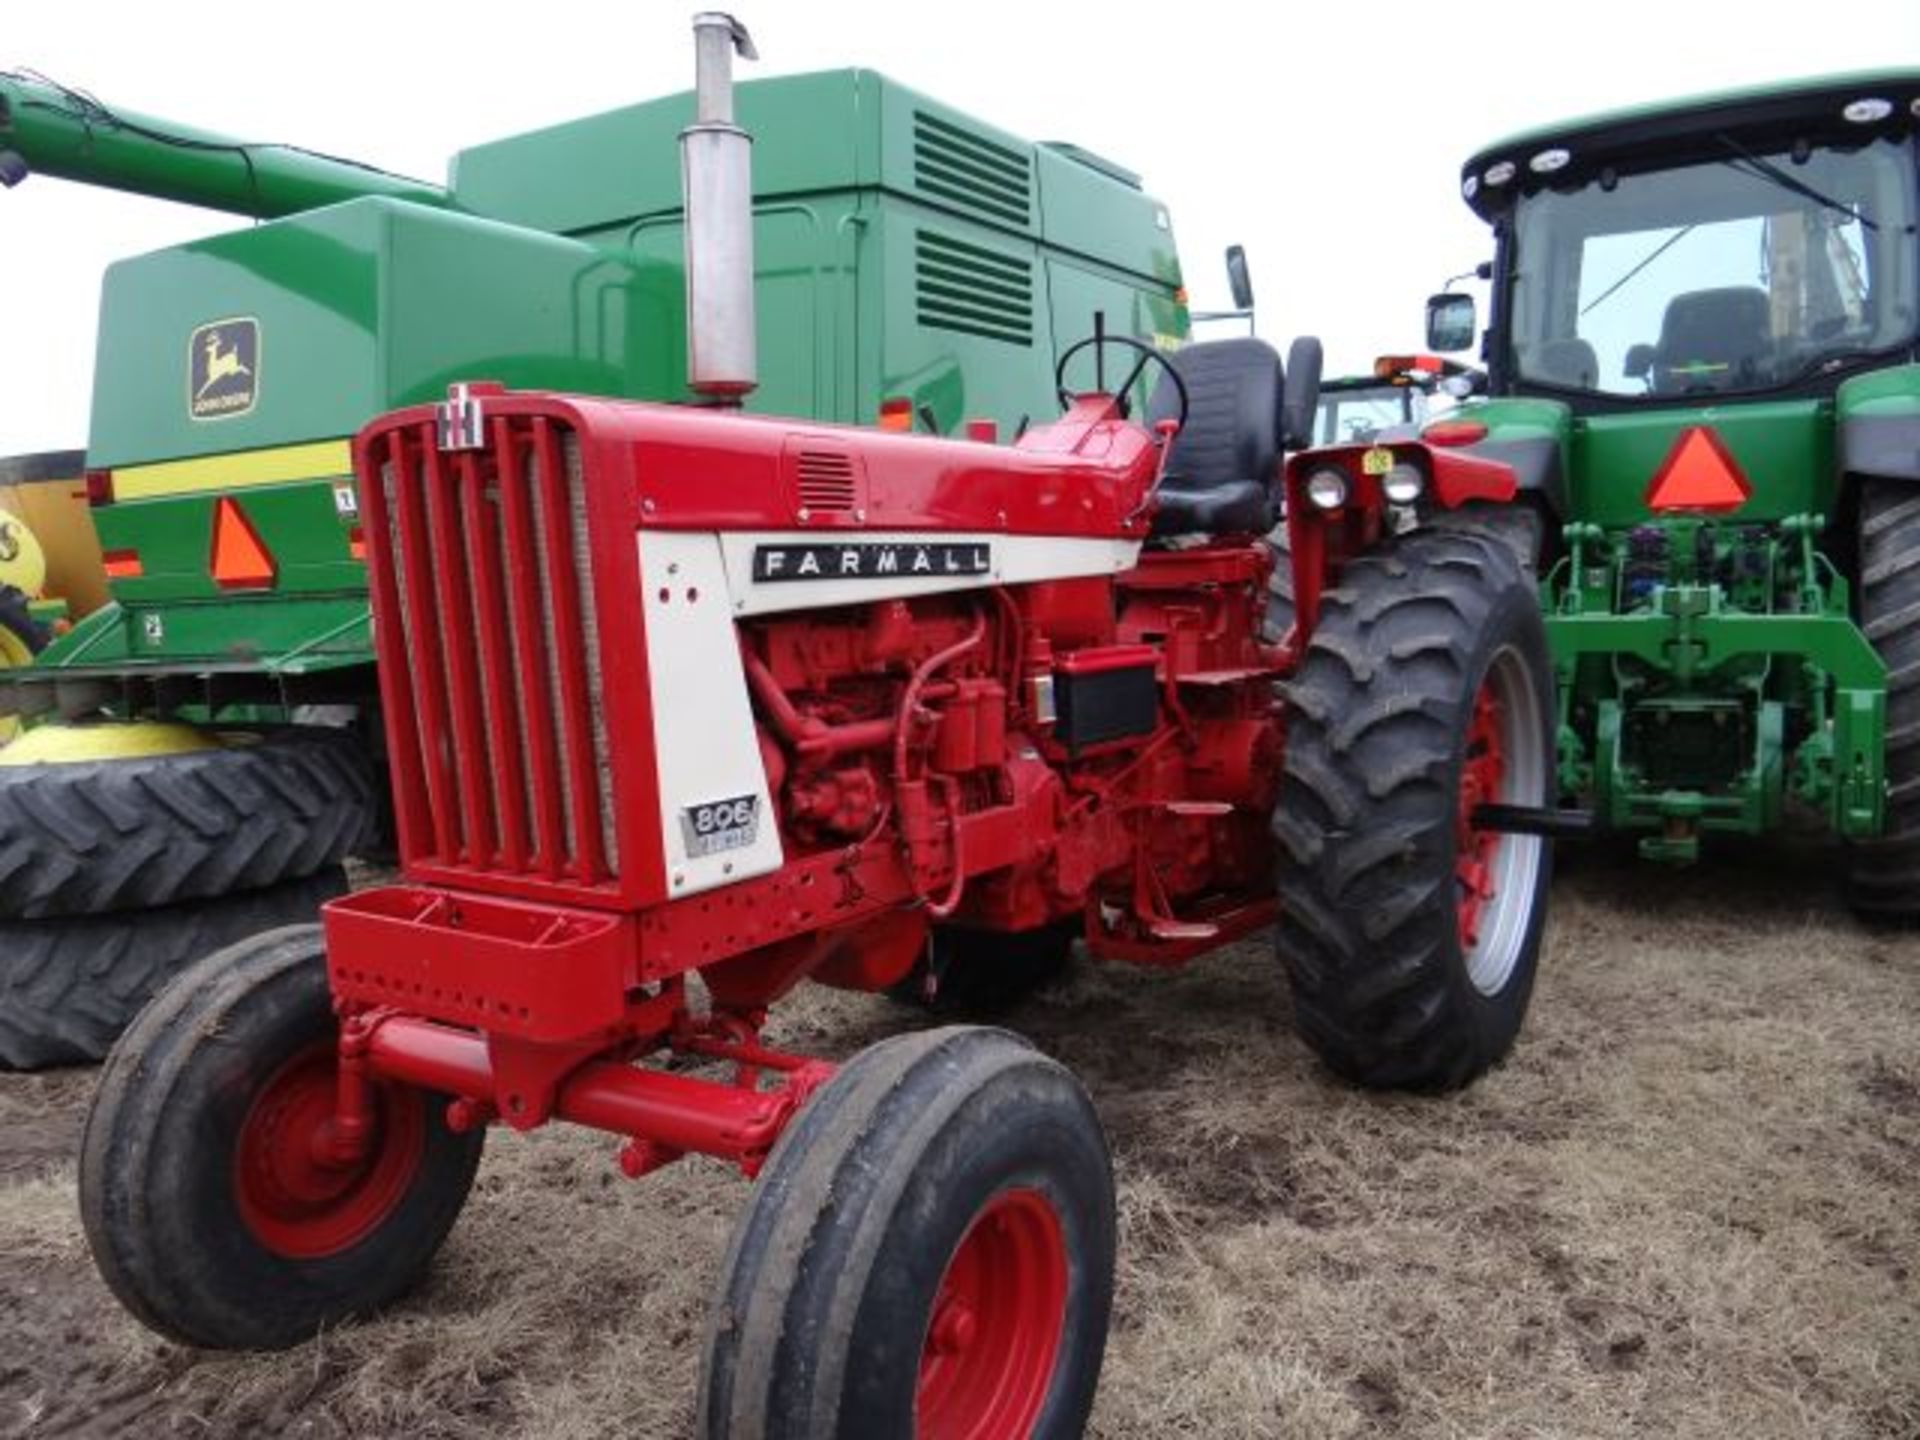 Lot # 1326 Farmall 806 Tractor, 1966 One Owner, New Injectors, Torque, Hyd Pump in Dec 2014, Sold